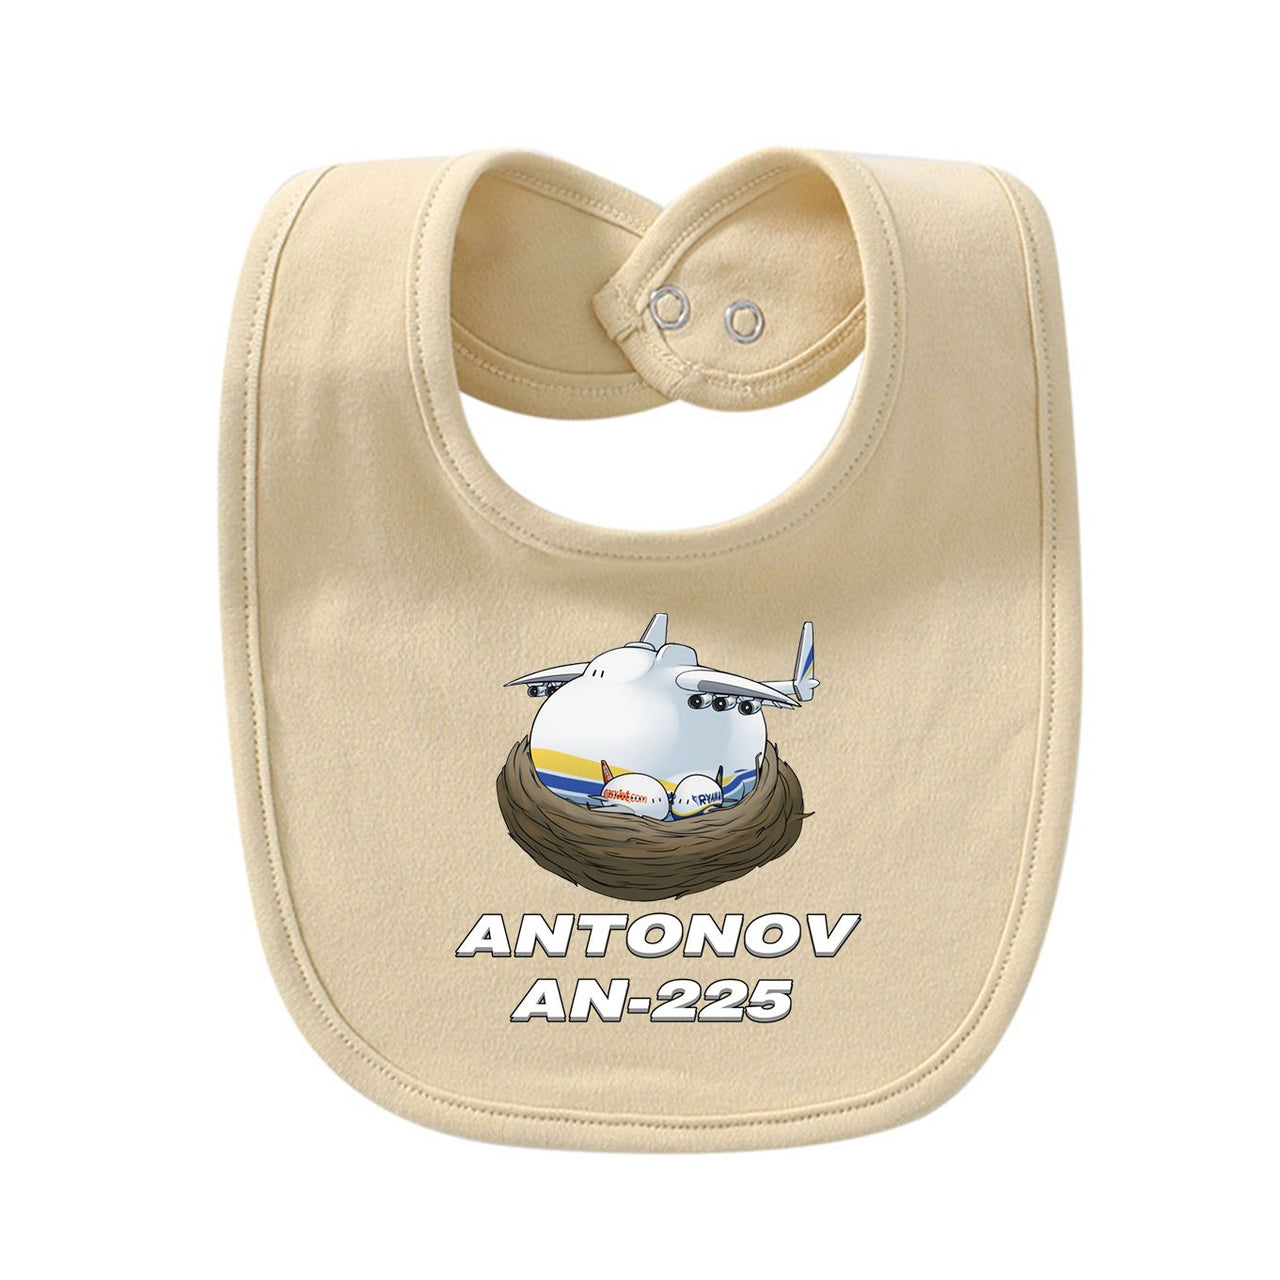 Antonov AN-225 (22) Designed Baby Saliva & Feeding Towels